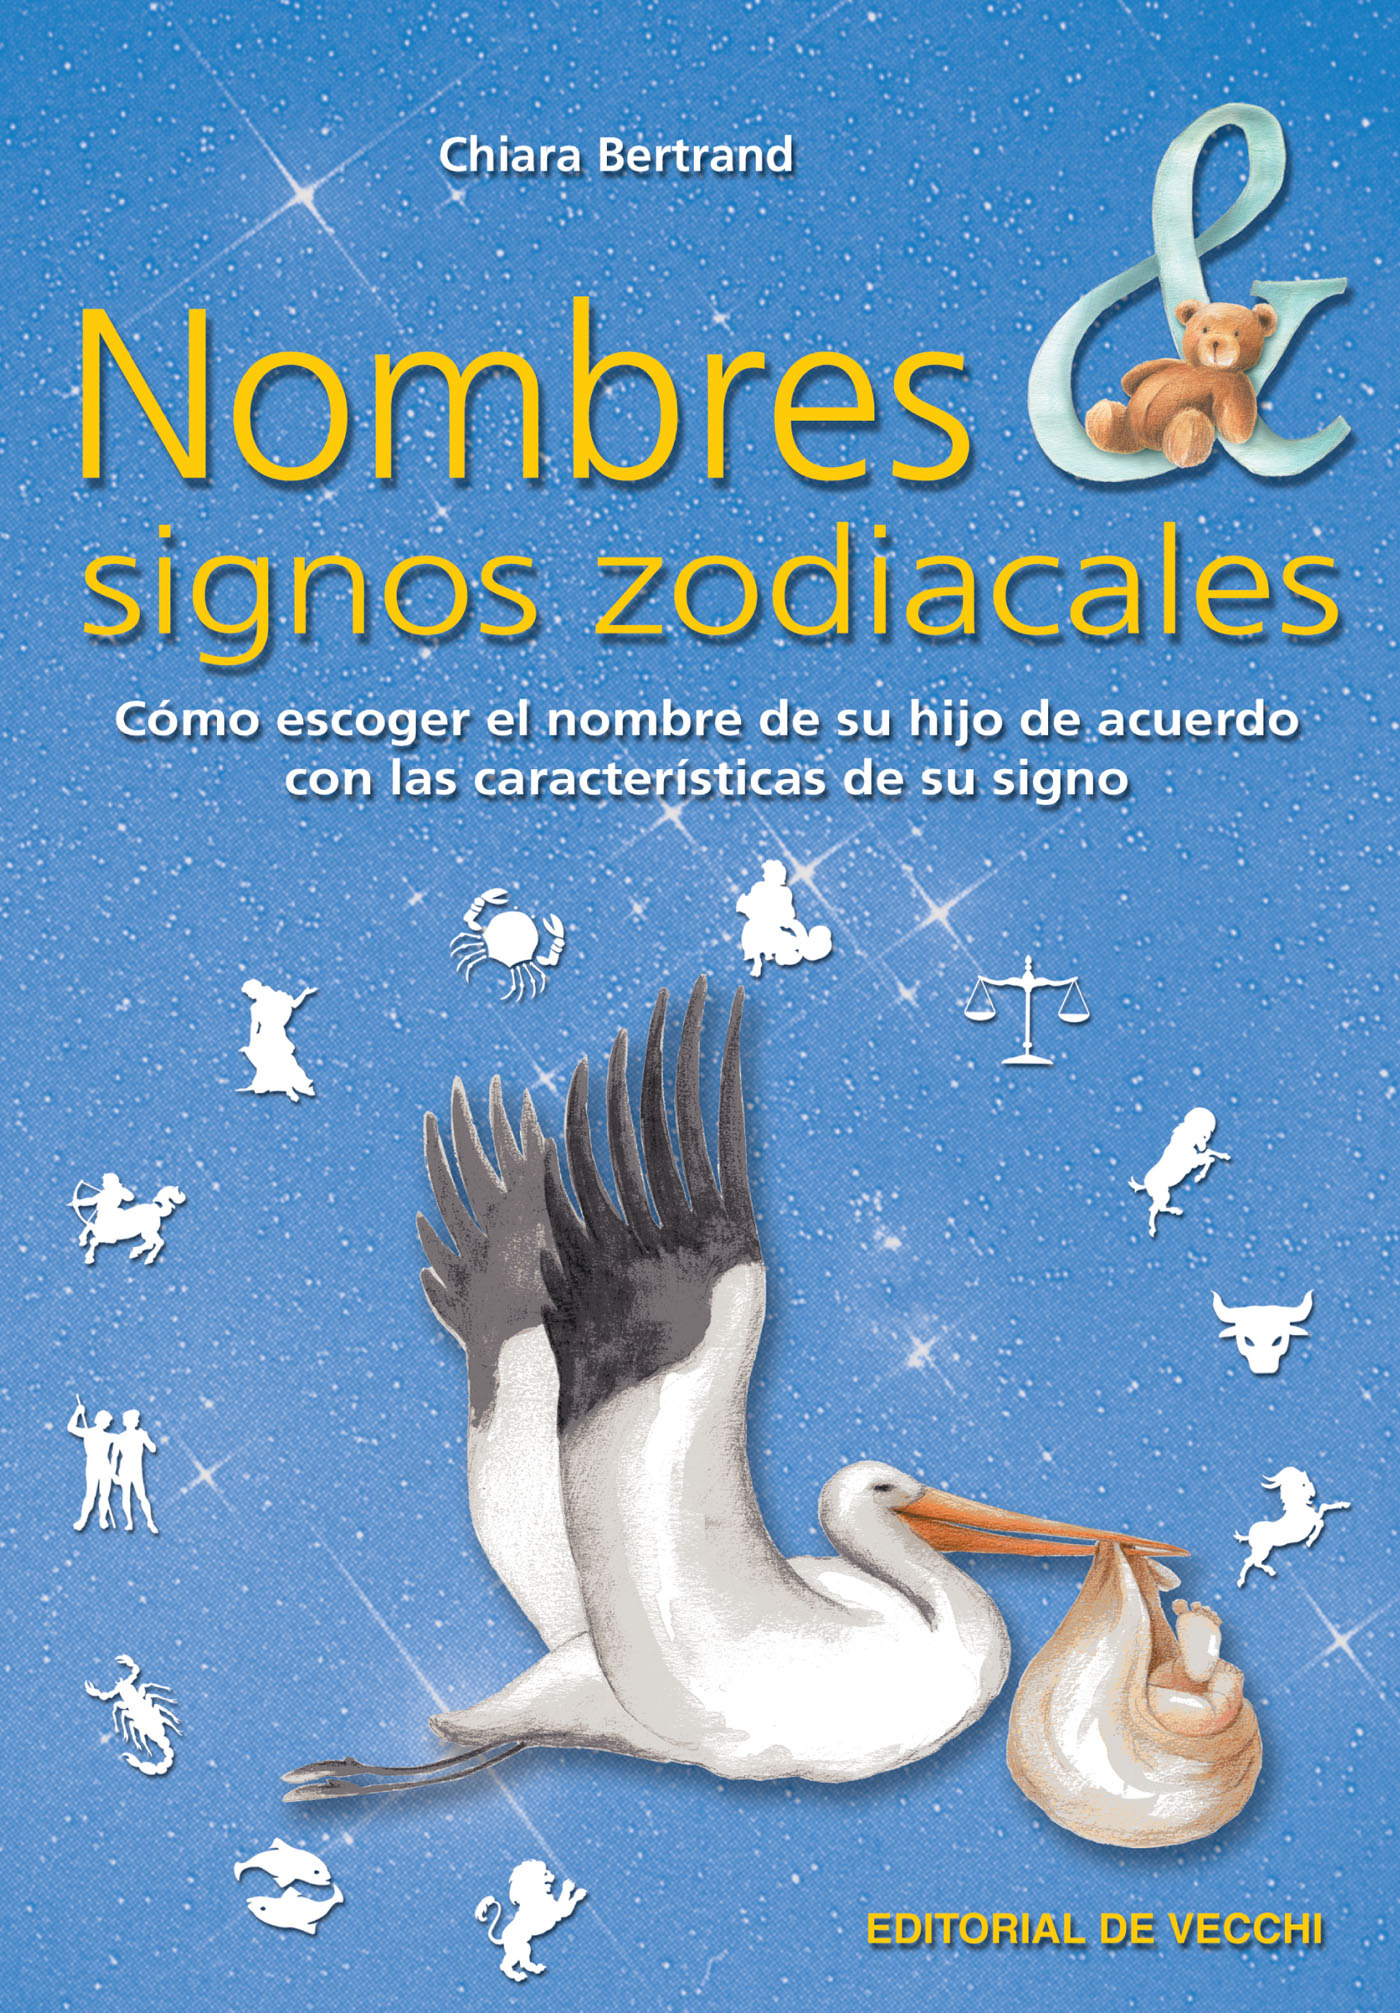 Bertrand, Chiara - Nombres & signos zodiacales, ebook